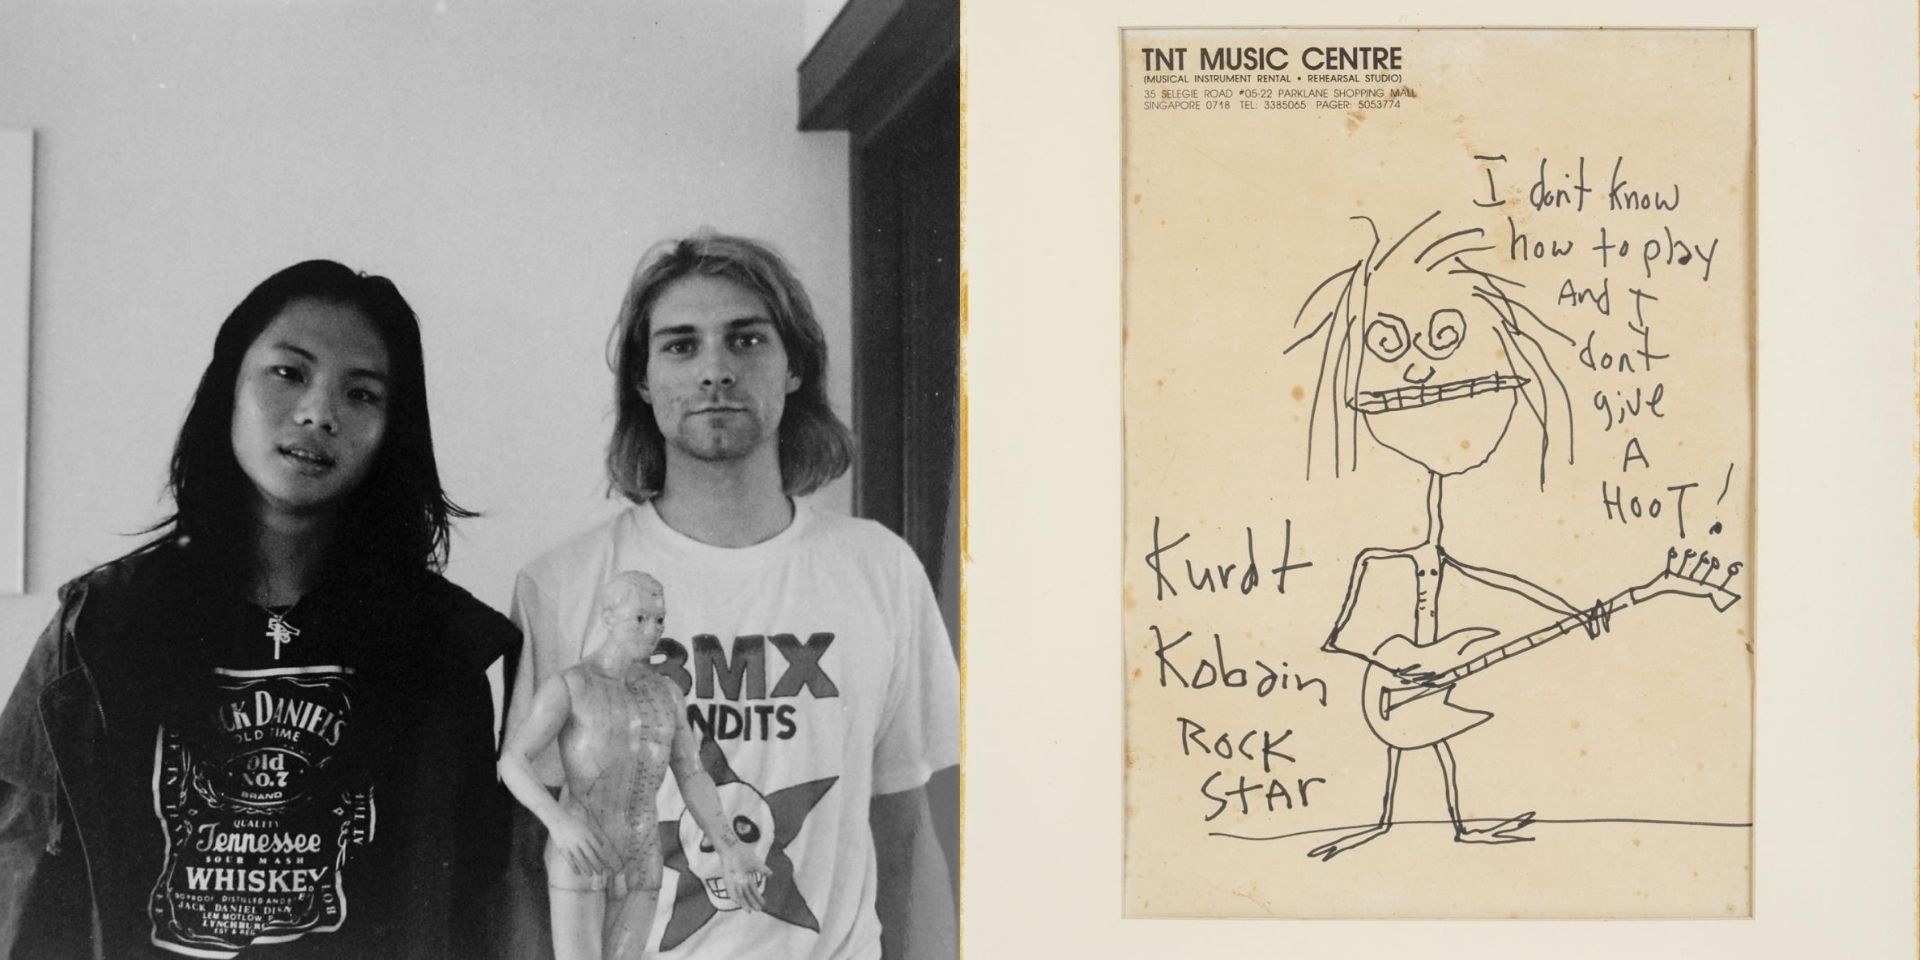 1992 self-portrait of Kurt Cobain in Singapore sells for US$281,250